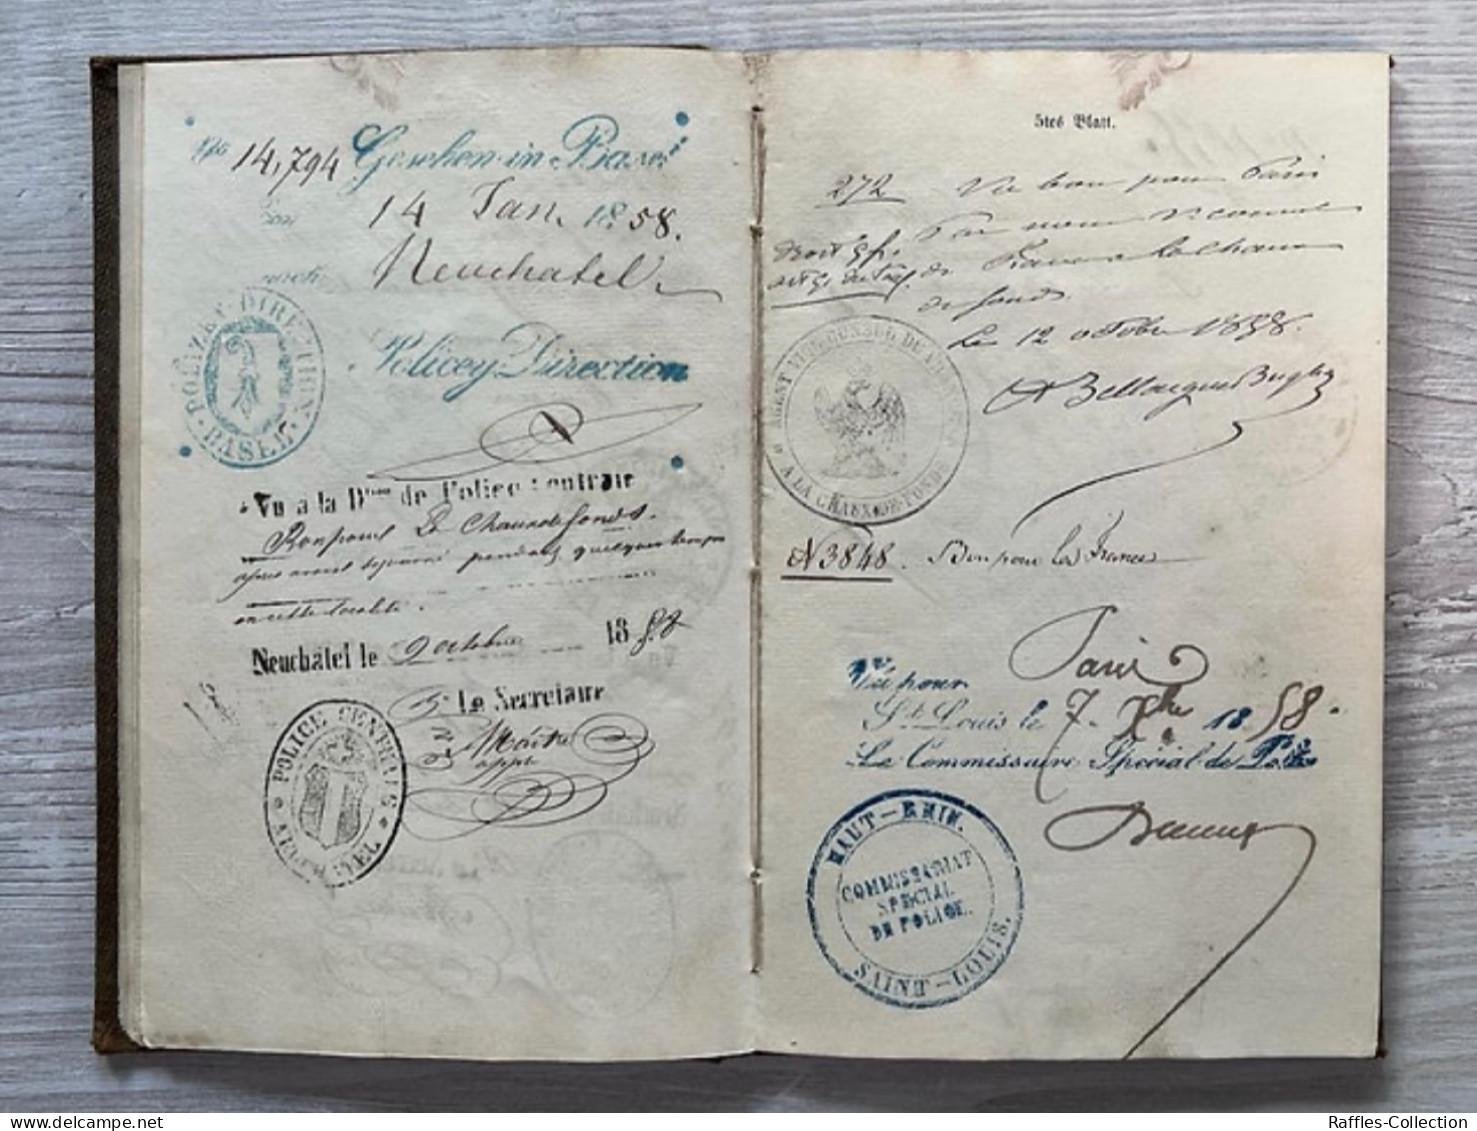 Swiss Switzerland Suisse Canton Basel 1856 passport & workbook, lots of visas passeport reisepass pasaporte passaporto